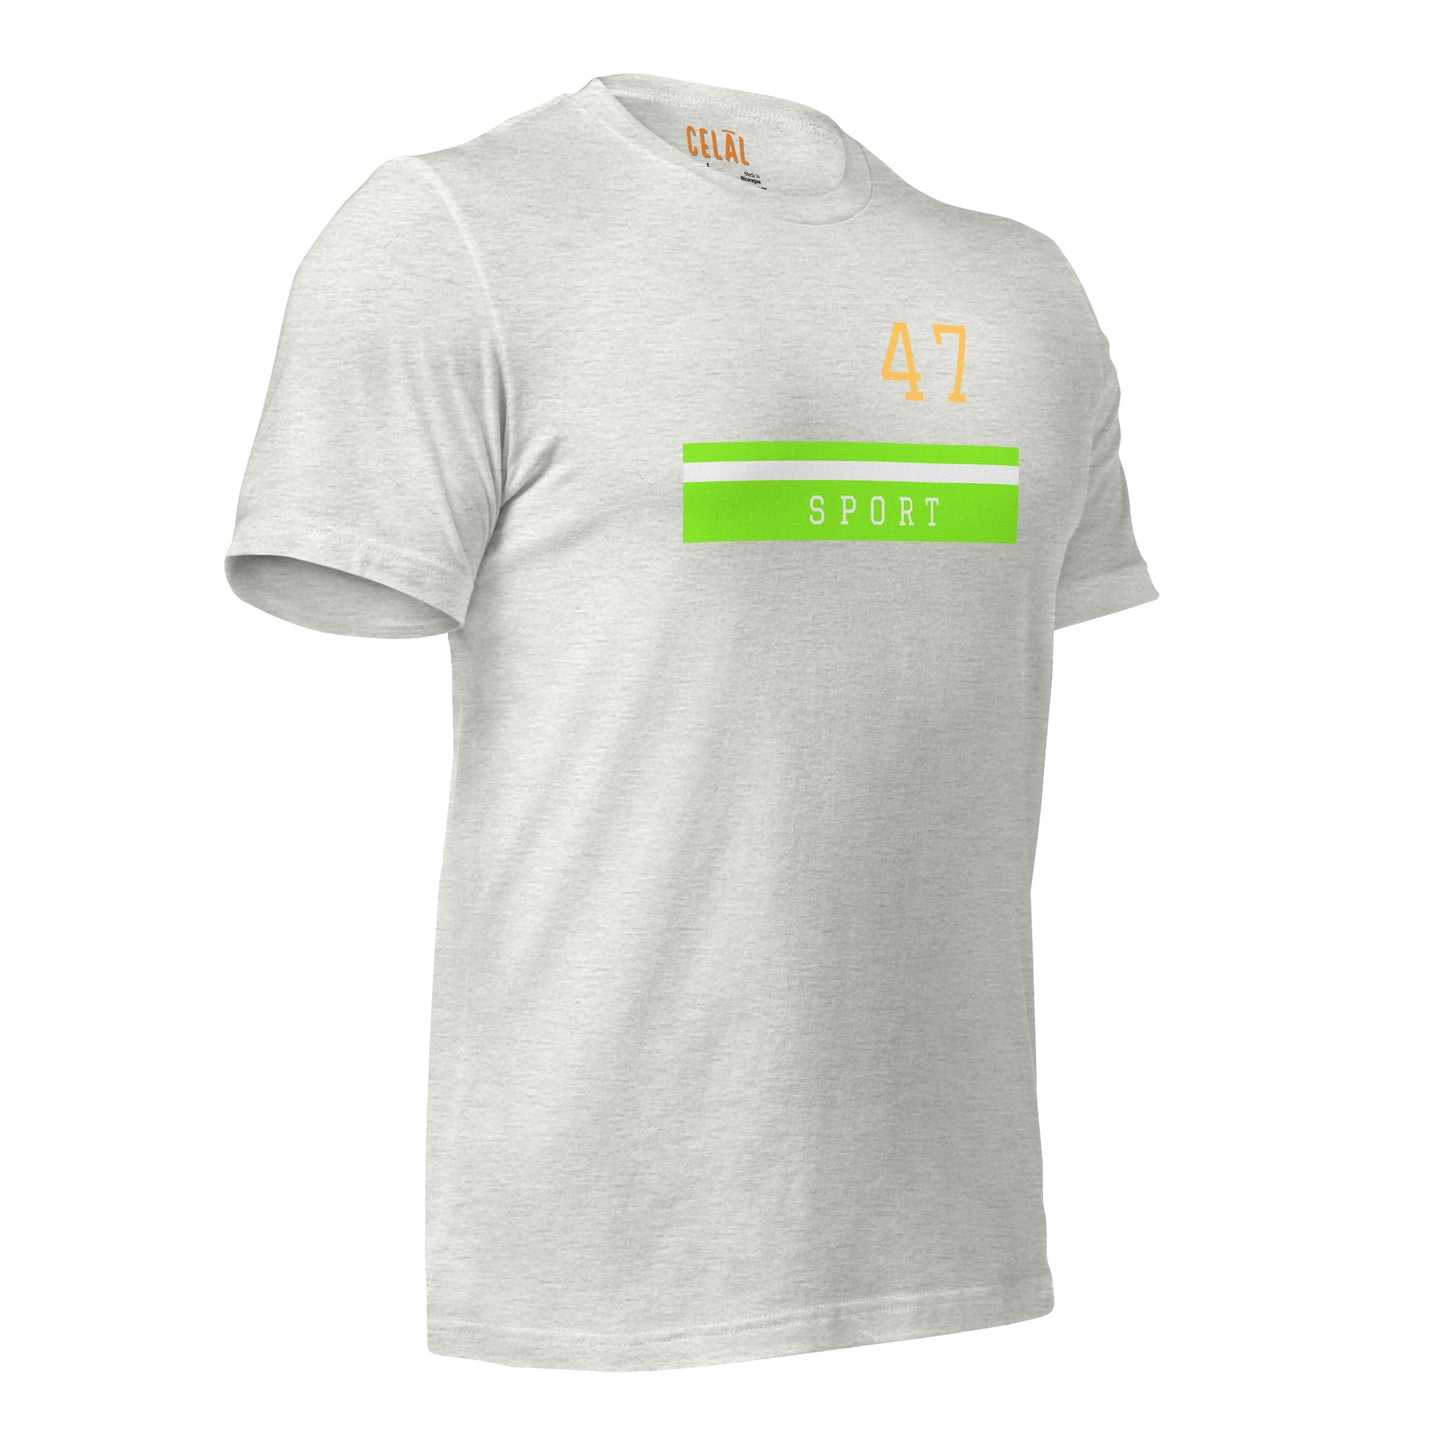 47 Unisex t-shirt